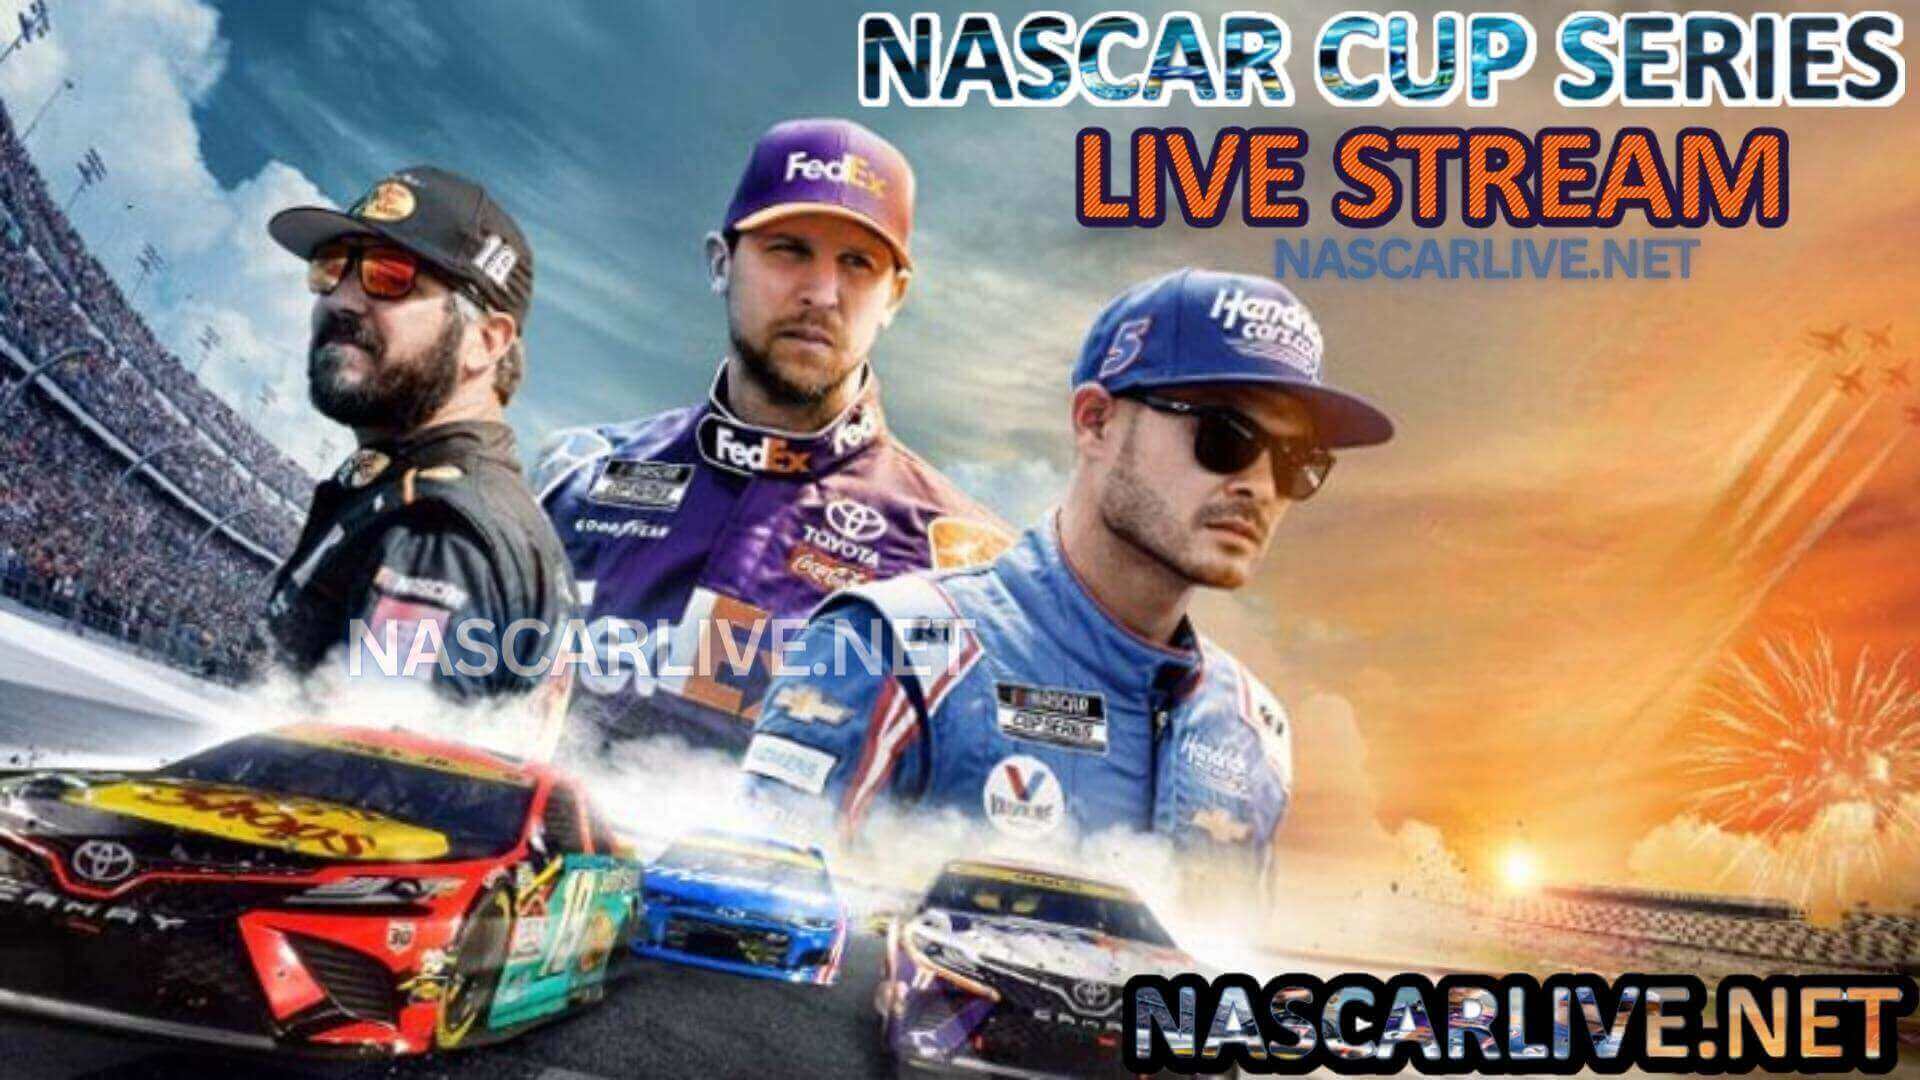 NASCAR Cup Series Live Stream